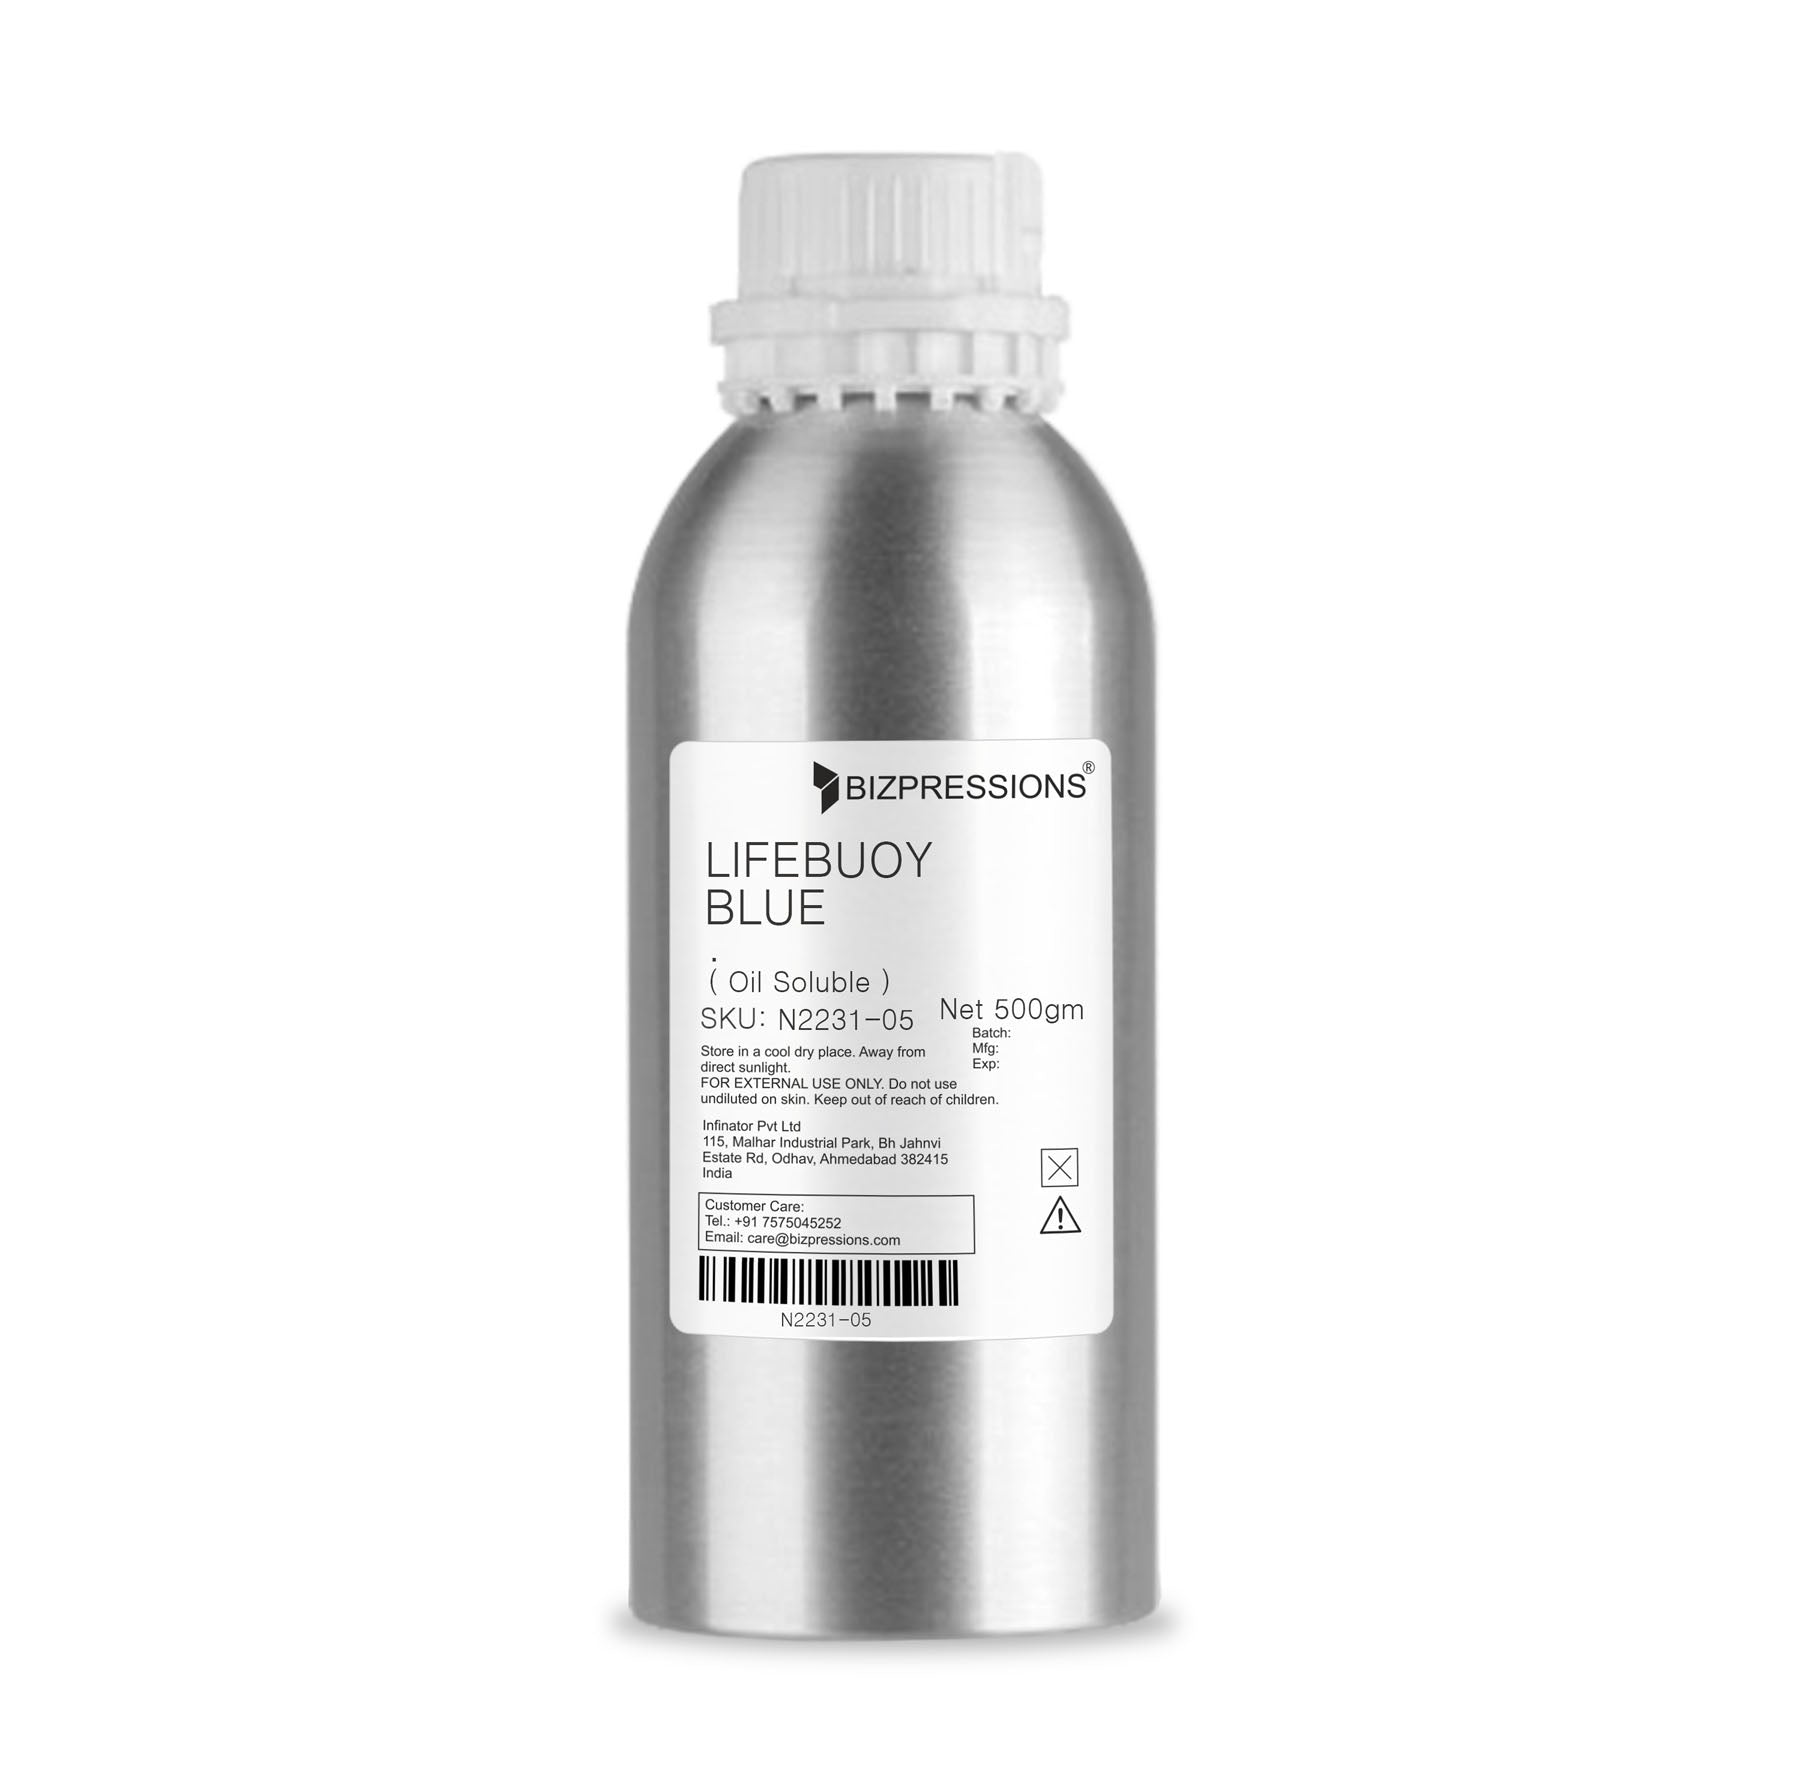 LIFEBUOY BLUE - Fragrance ( Oil Soluble ) - 500 gm